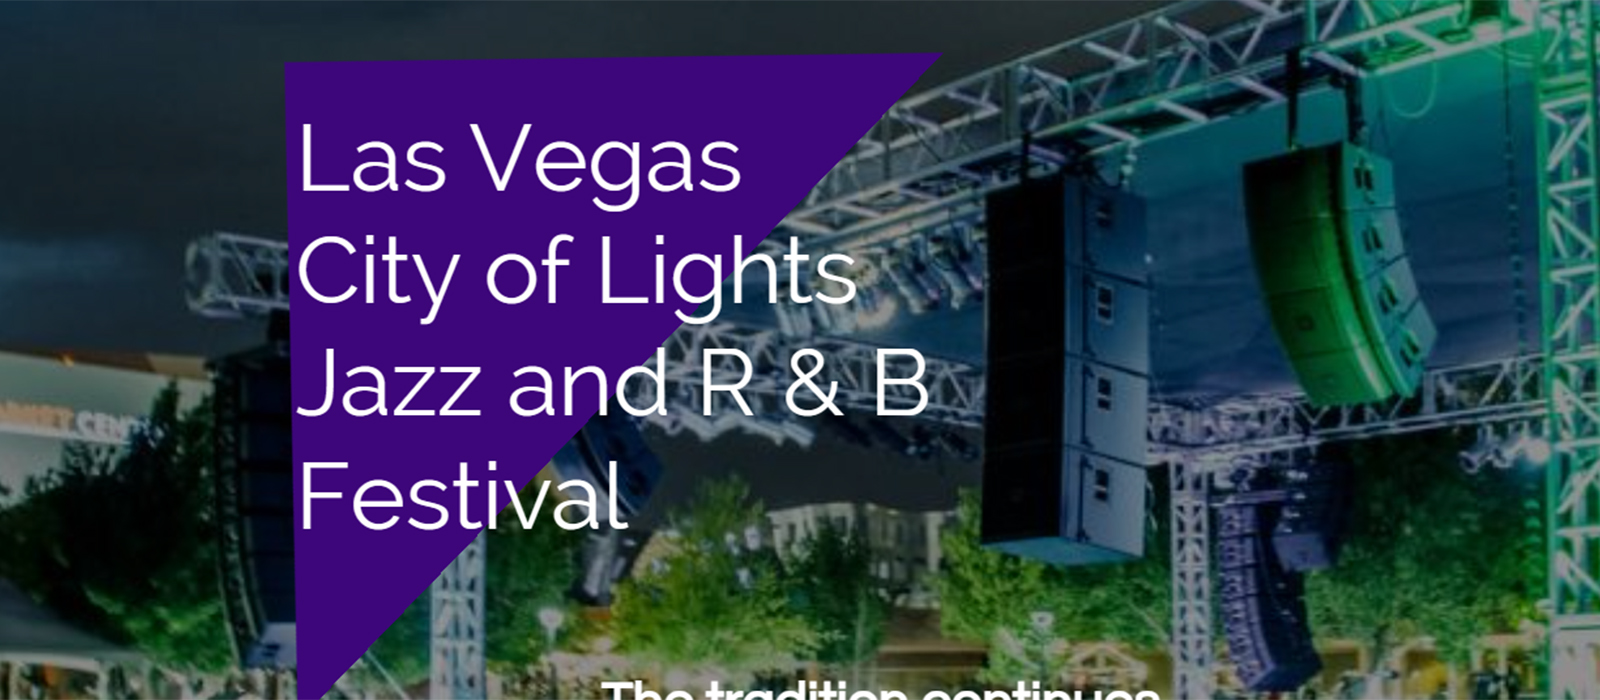 Las Vegas City of Lights Jazz and R & B Festival Create.Vegas